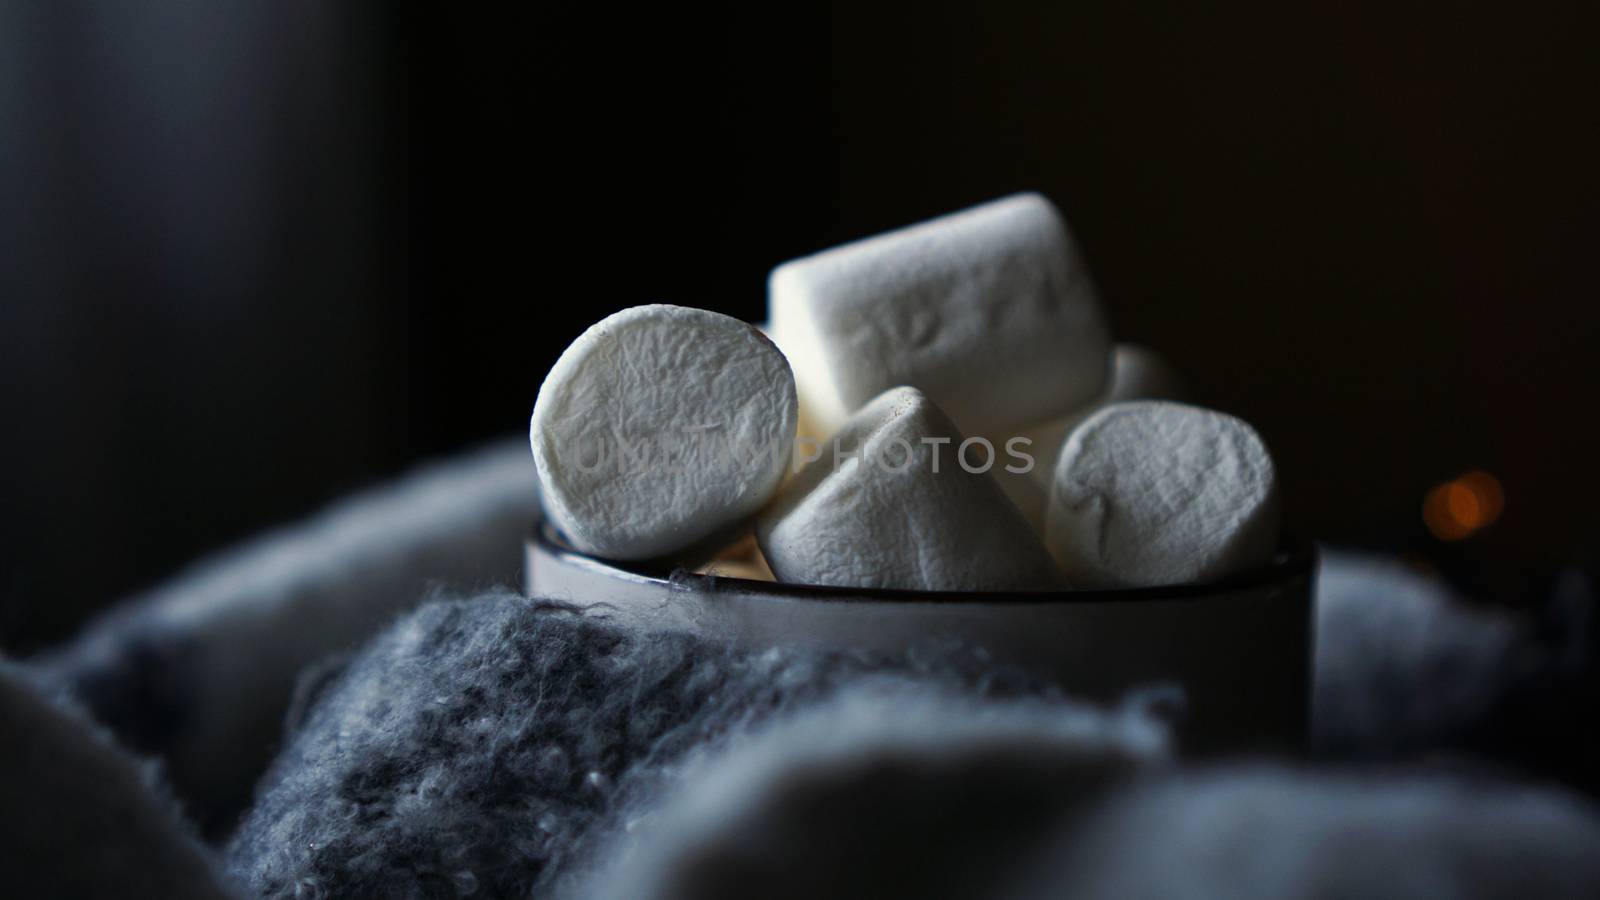 Hot cocoa with marshmallow in a white ceramic mug - dark background by natali_brill